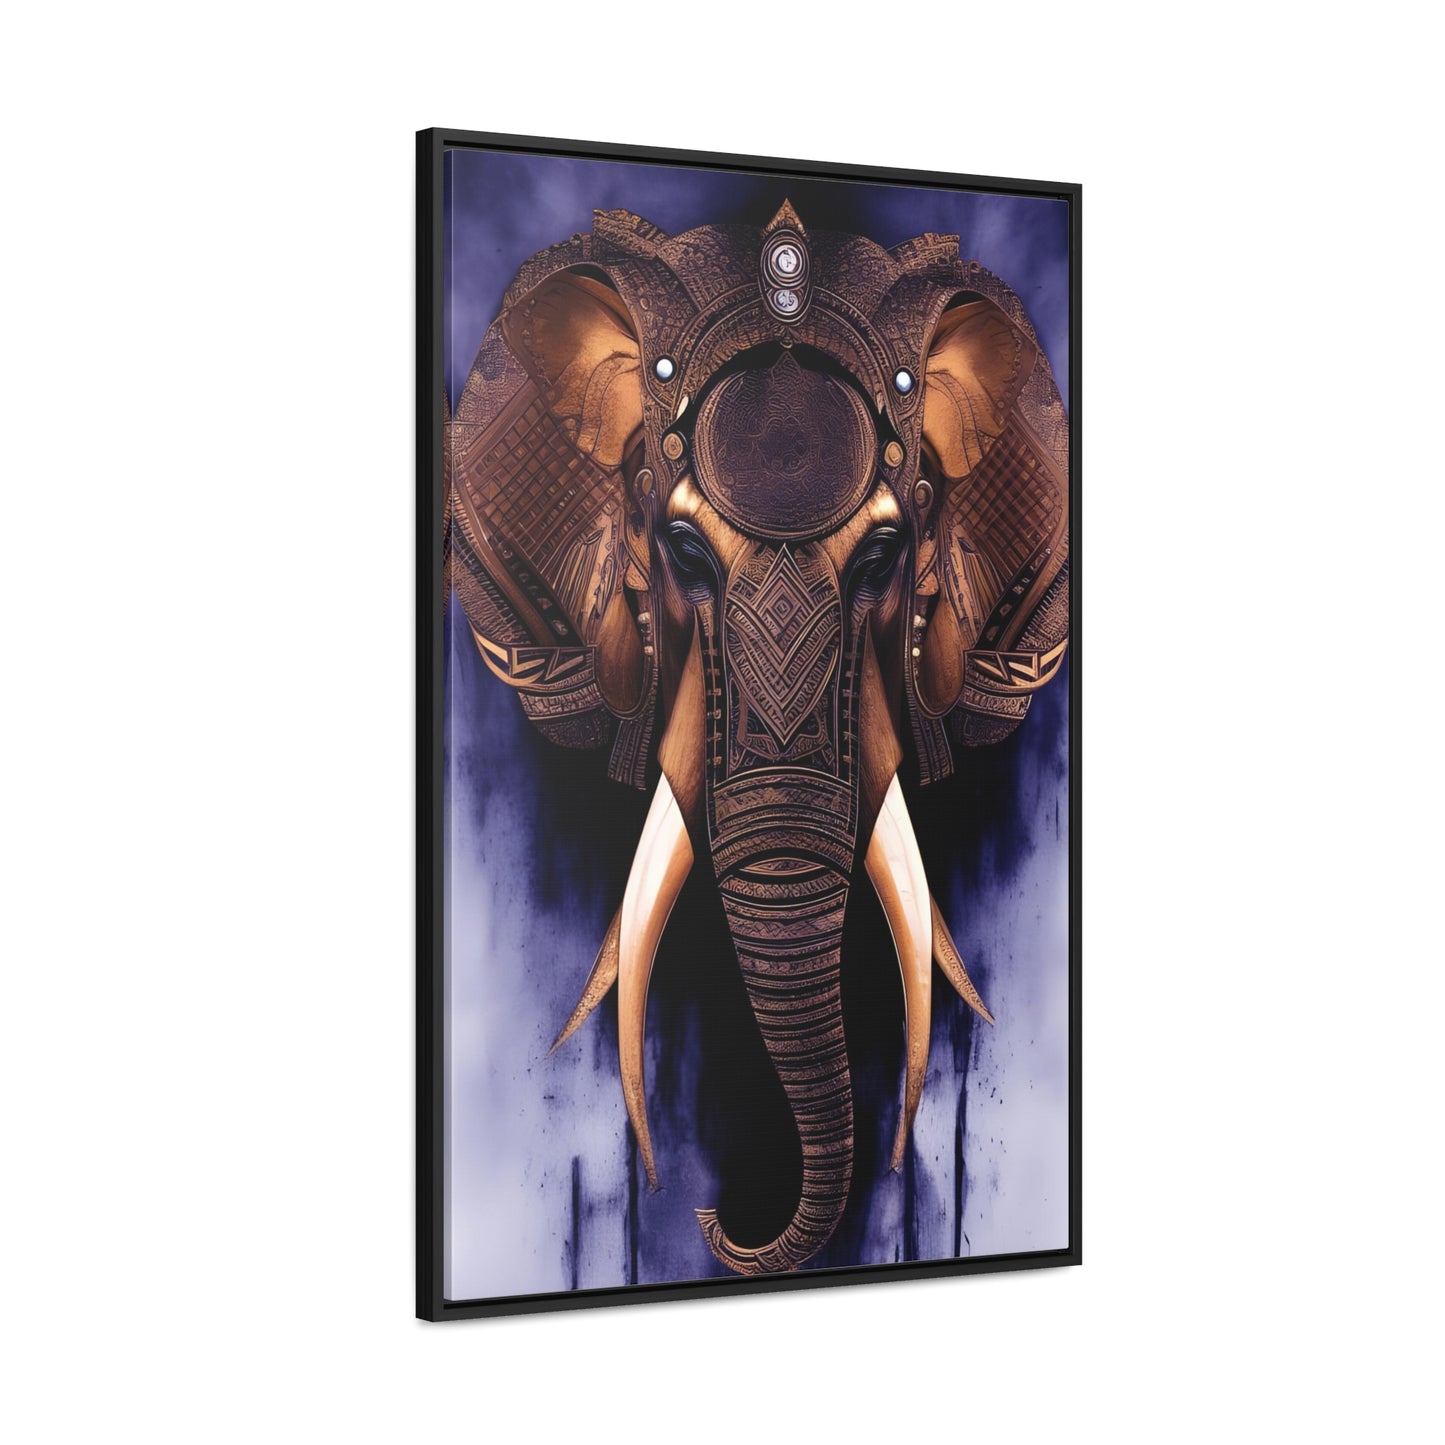 Elephant Themed Modern Wall Art - Tribal Elephant Head on Purple Background Print on Canvas in a Floating Frame